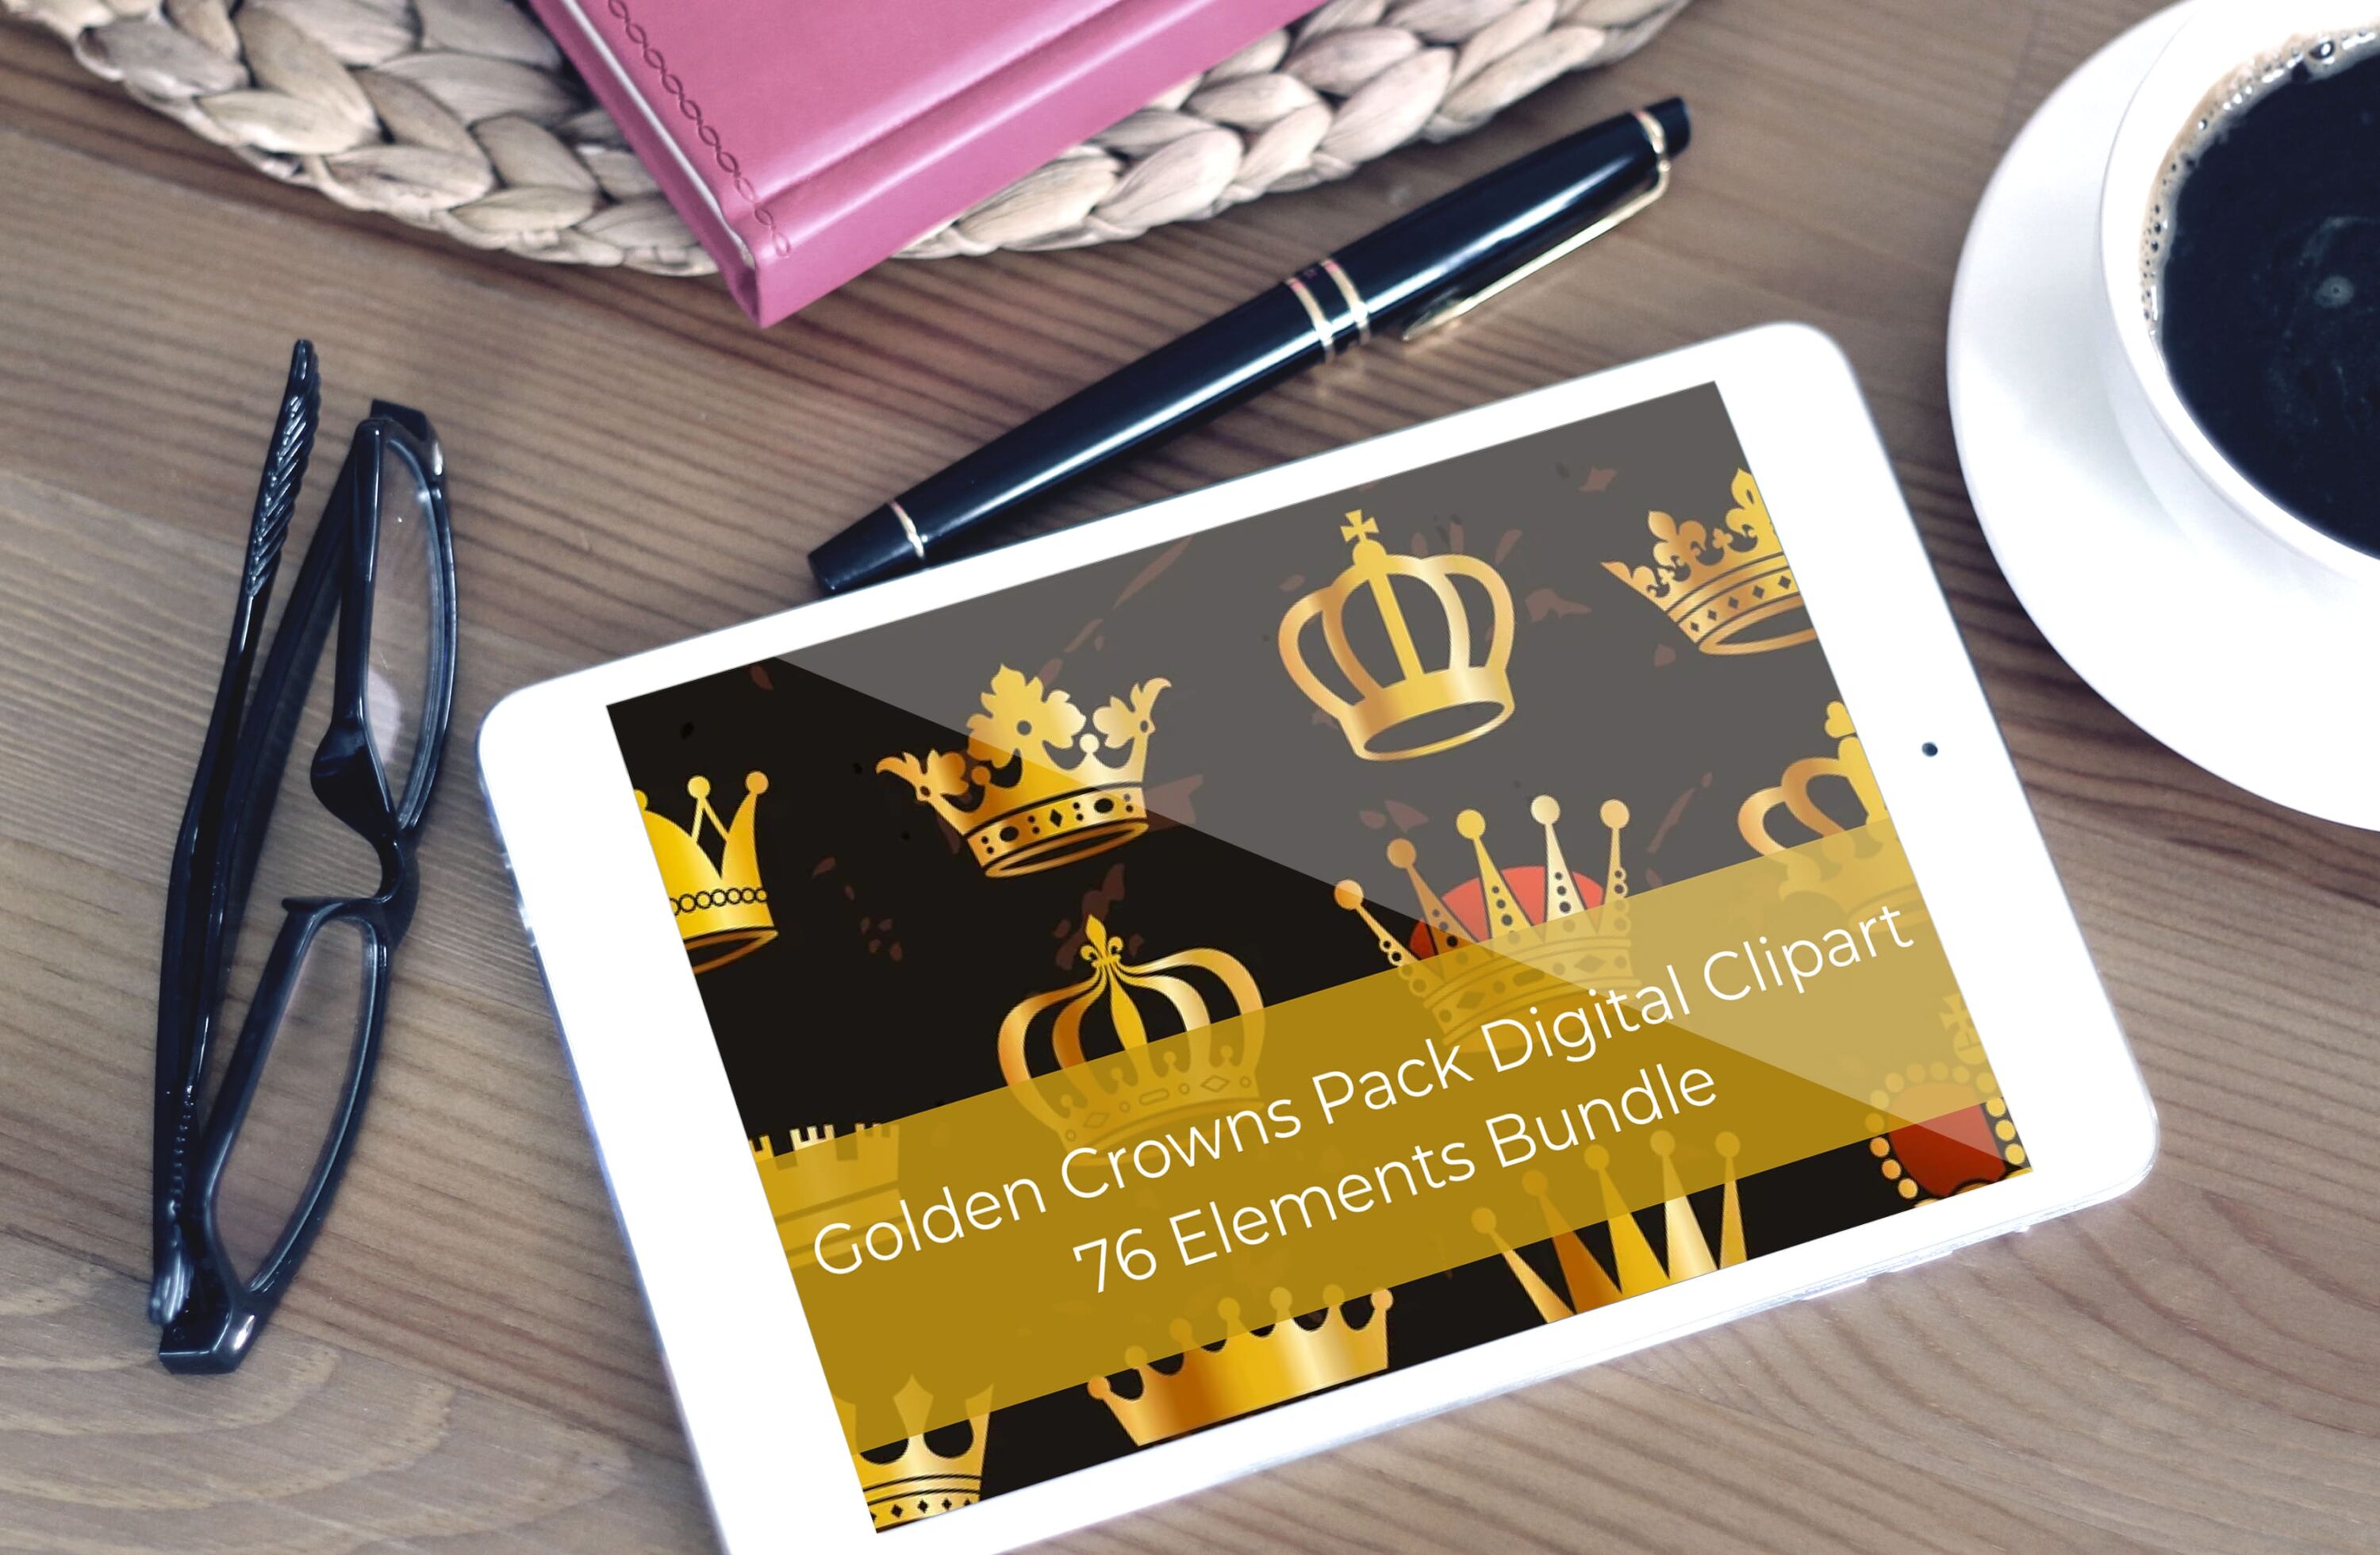 Tablet option of the Golden Crowns Pack Digital Clipart, 76 Elements Bundle.